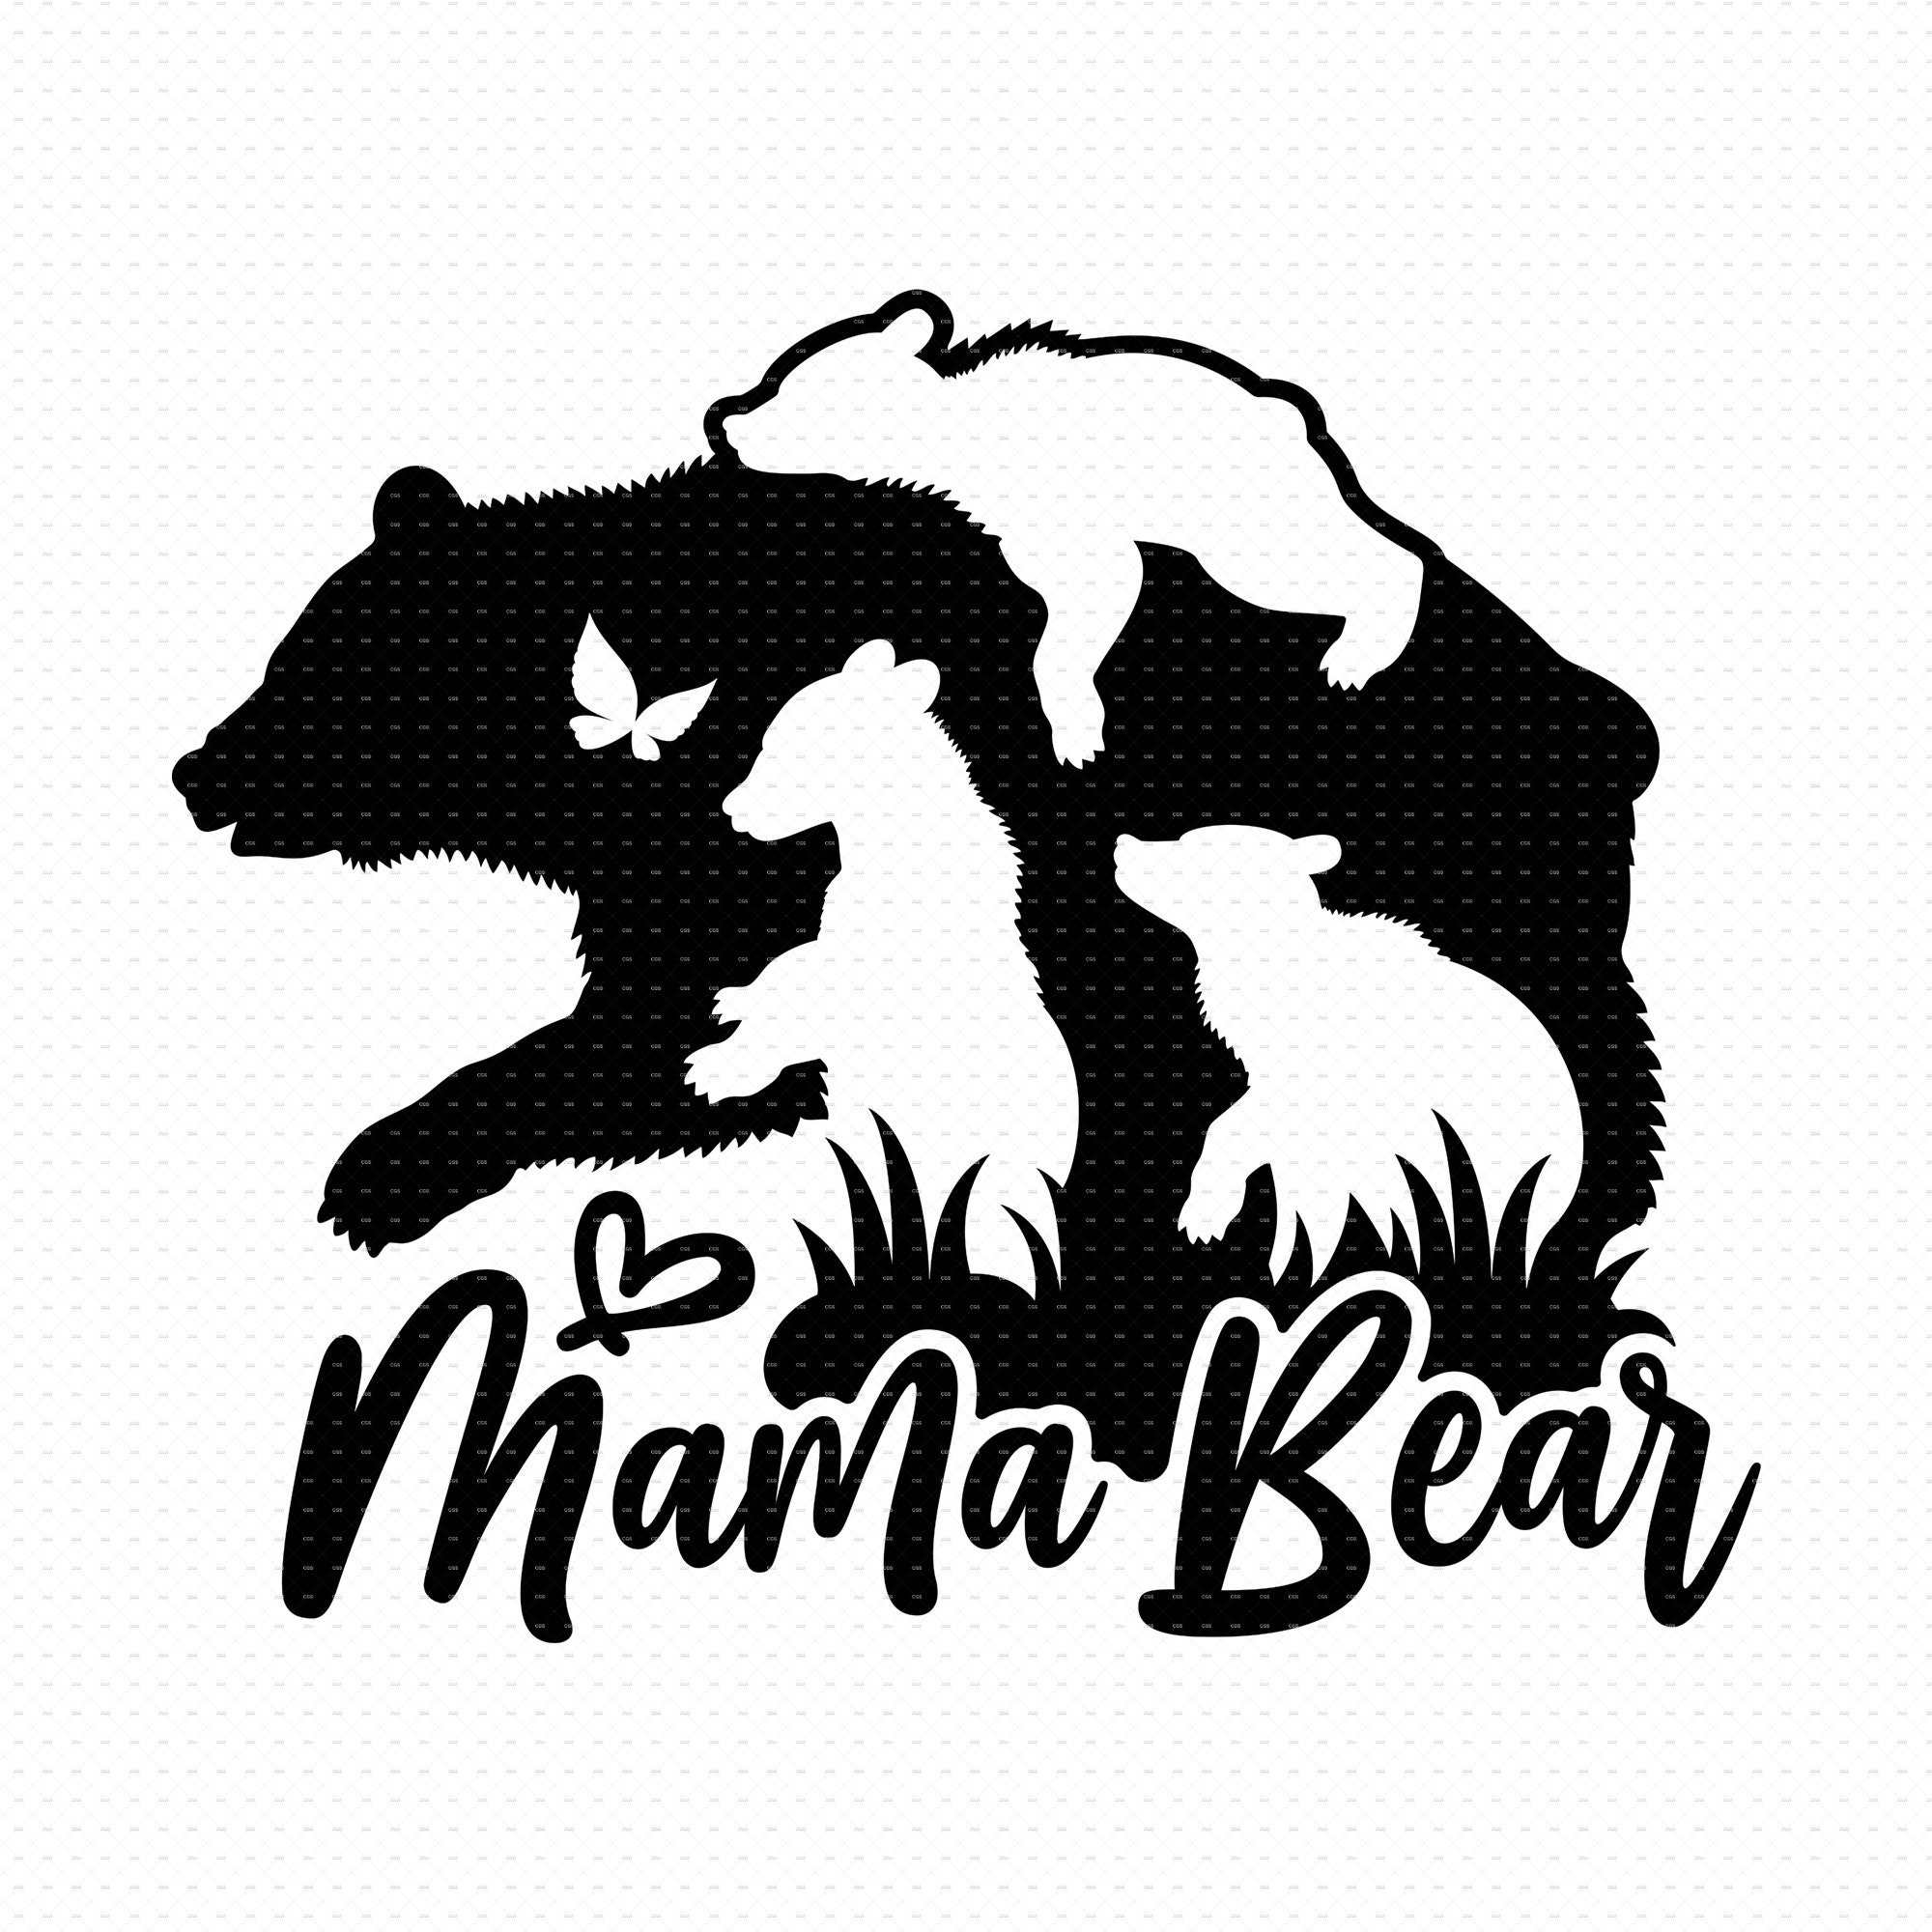 Protective Mama Bear Digital Art by Asia Rae - Pixels